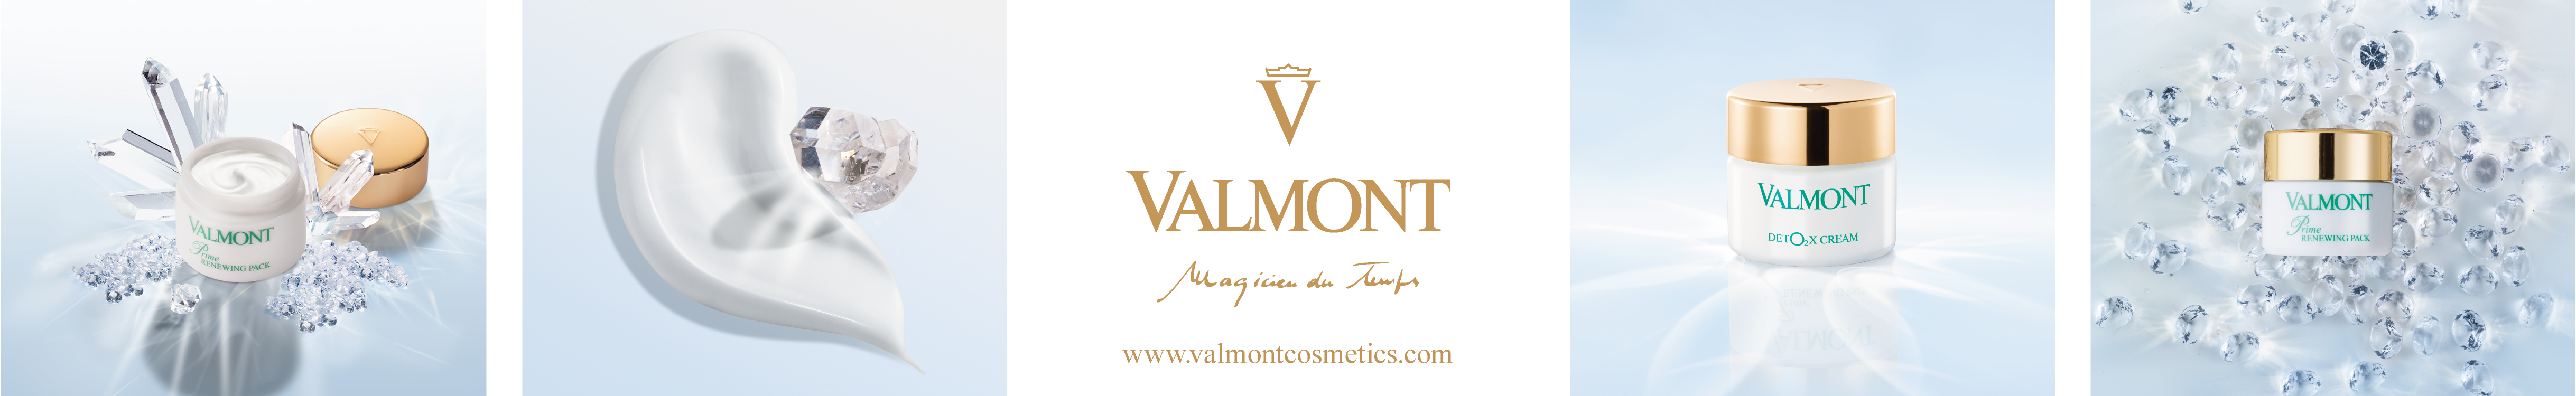 Valmont Cosméticos